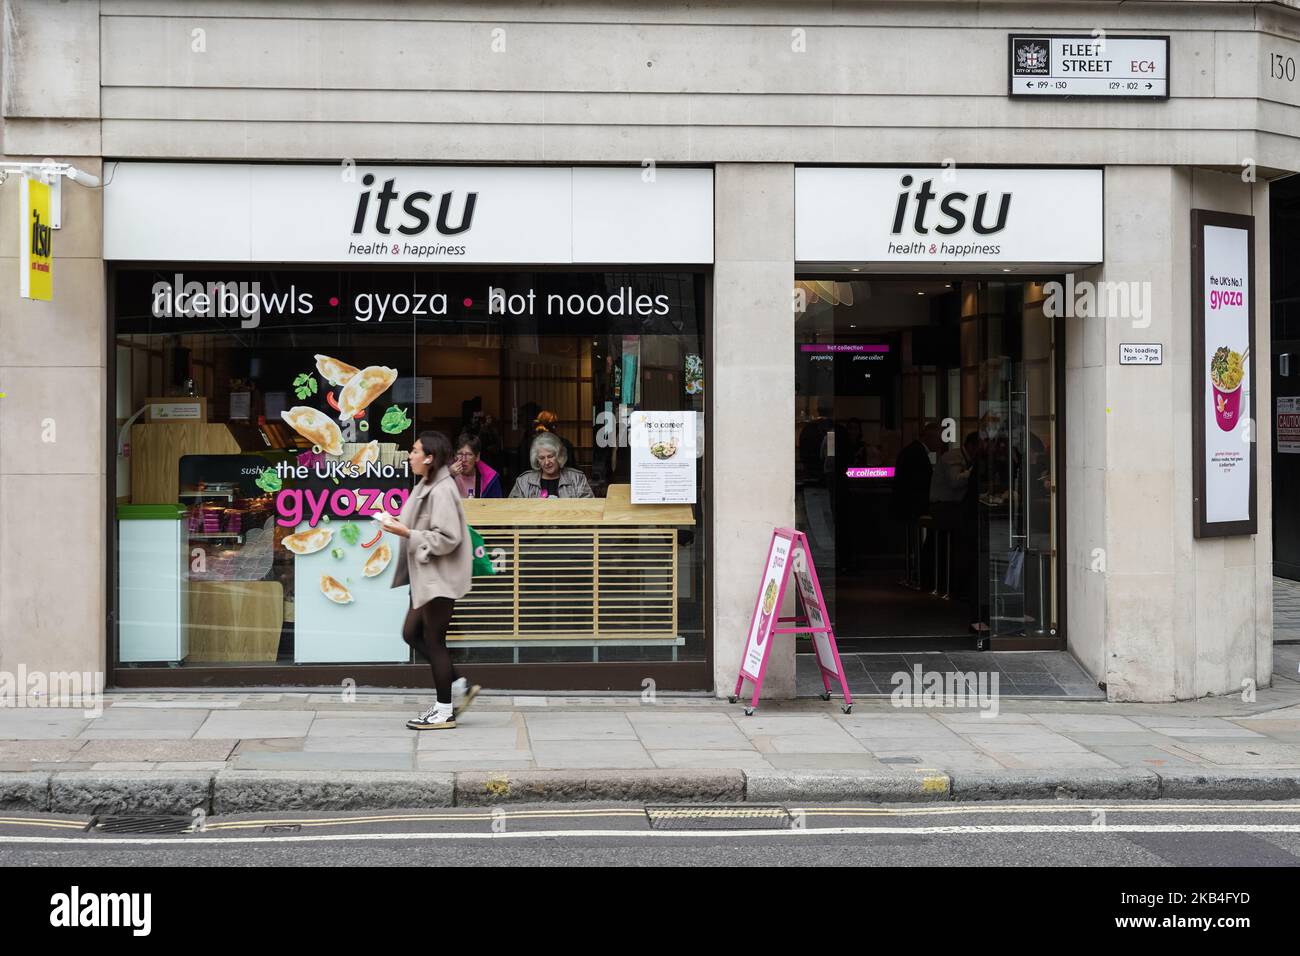 itsu chain shop and restaurant in London England United Kingdom UK Stock Photo